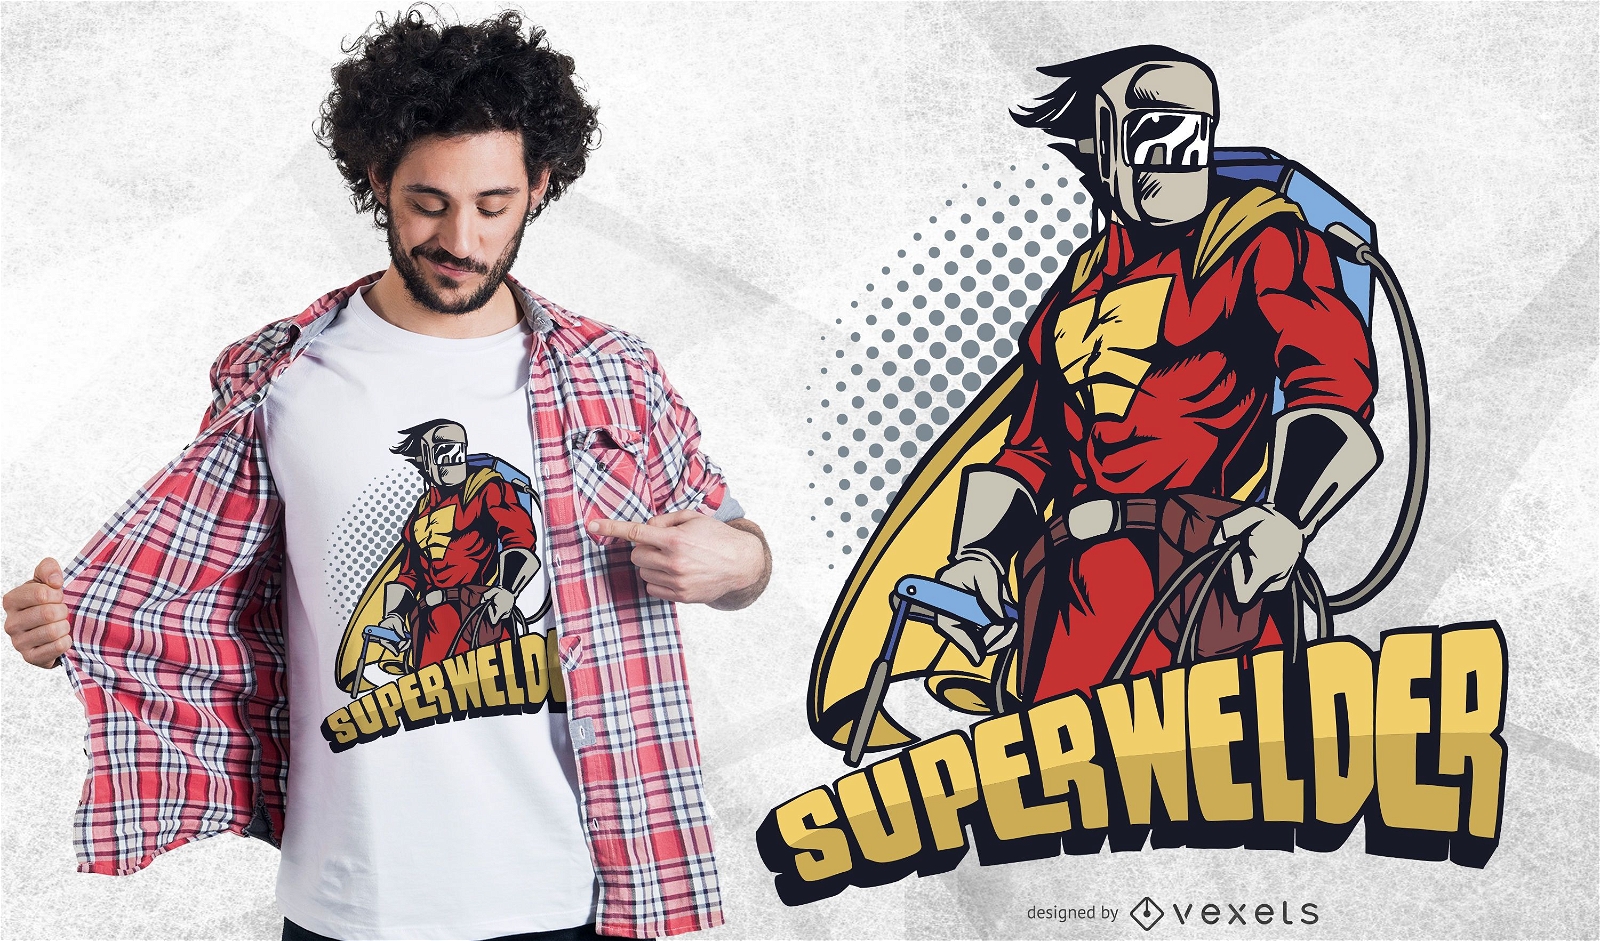 Superwelder Lustiges T-Shirt Design